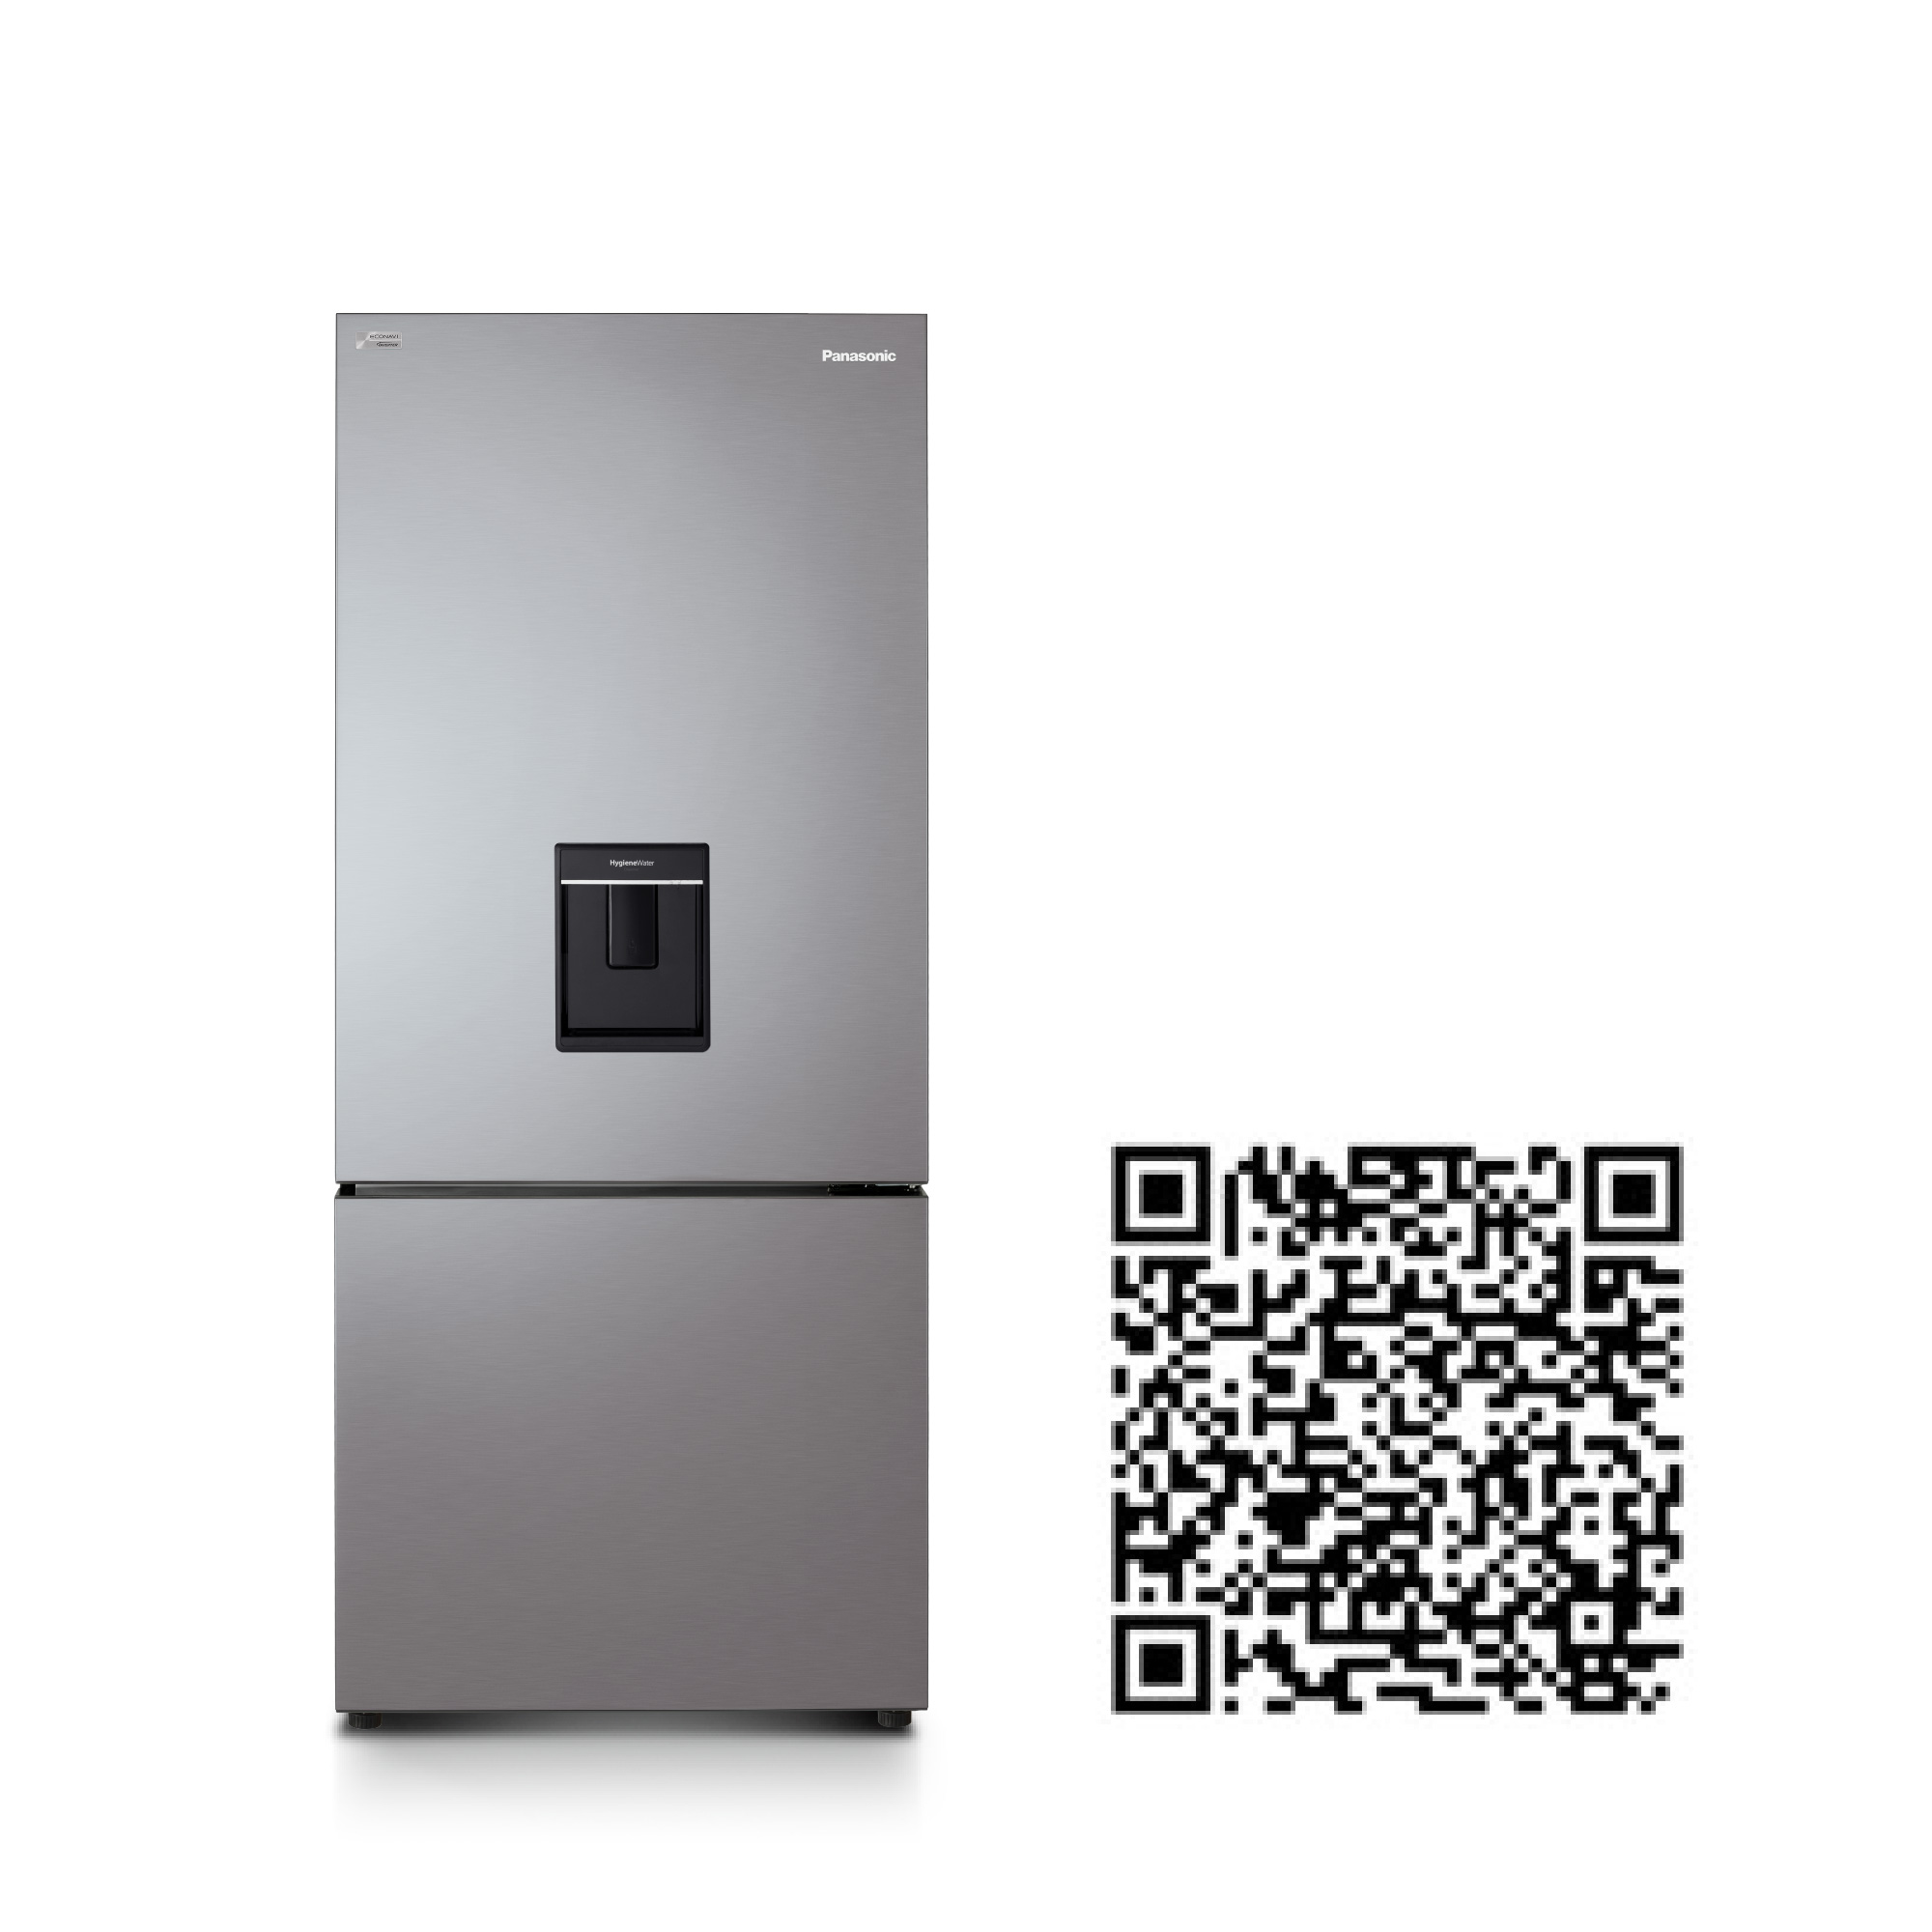 NR-BX421GPKA Hygiene Water Refrigerators